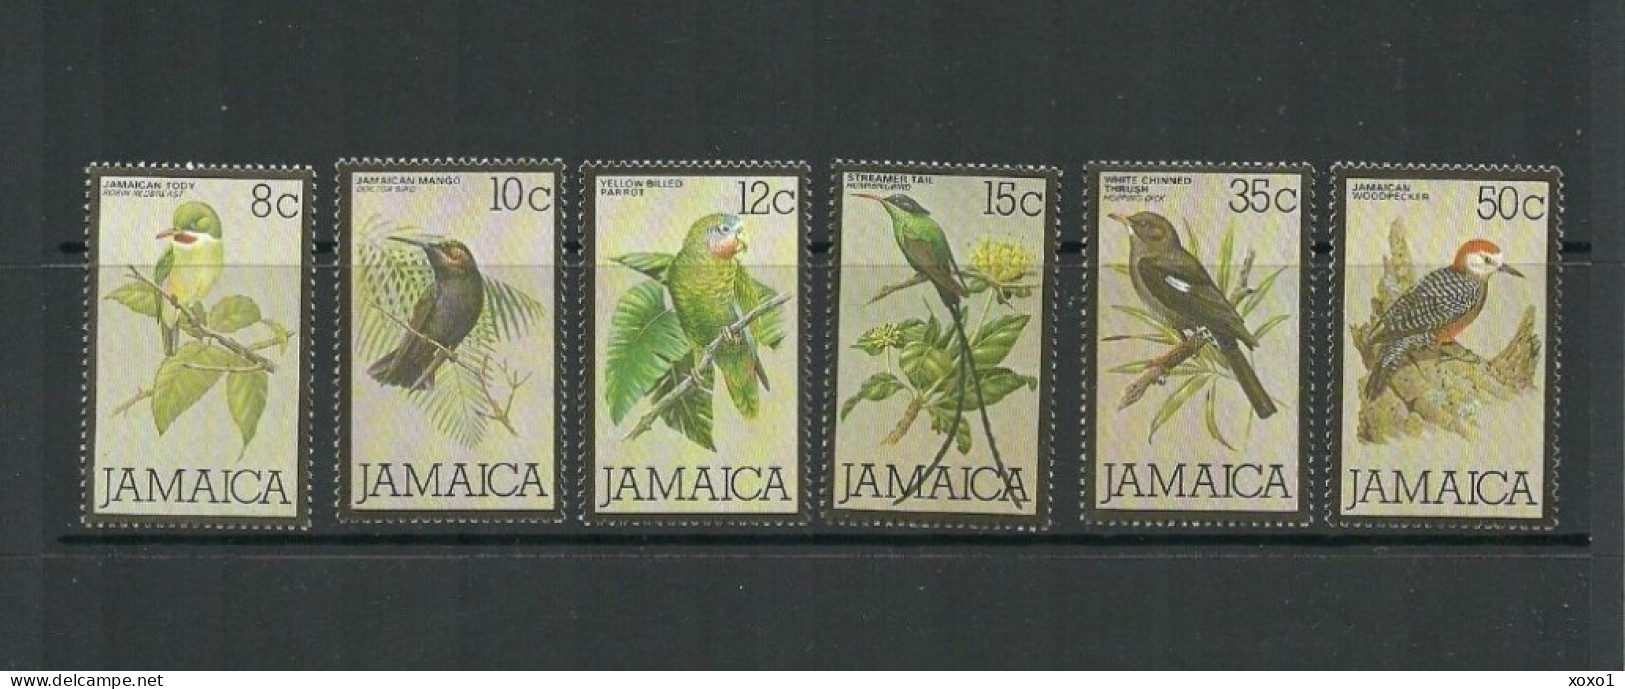 Jamaica 1980 MiNr. 472 - 477 Jamaika Endemic Birds Woodpecker, Thrush, Hummingbirds, Parrot, Tody 6v MNH** 4.50 € - Kolibries